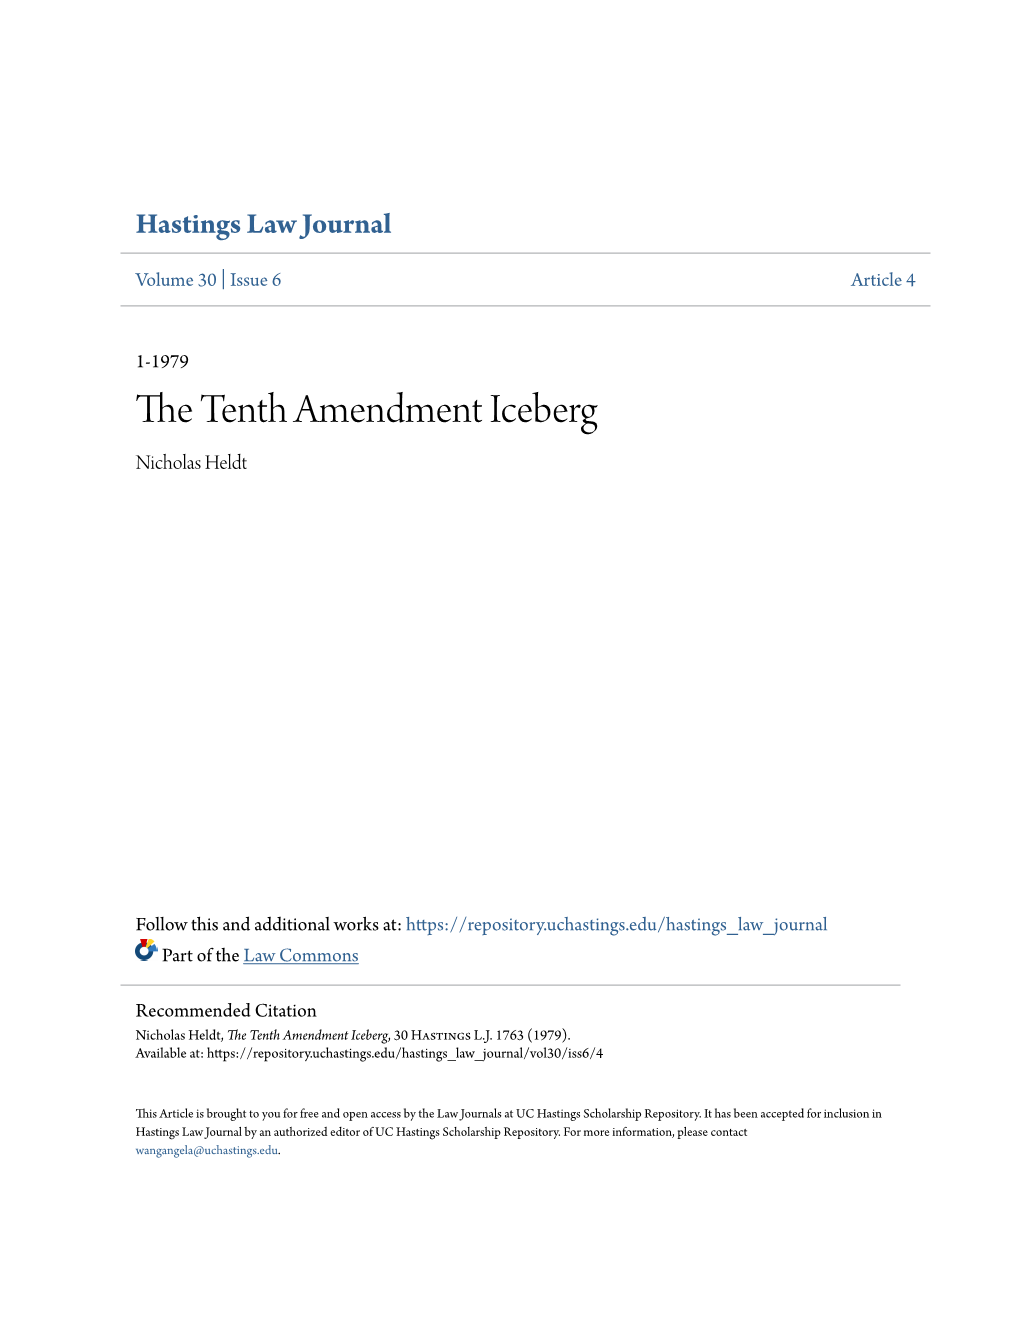 The Tenth Amendment Iceberg, 30 Hastings L.J